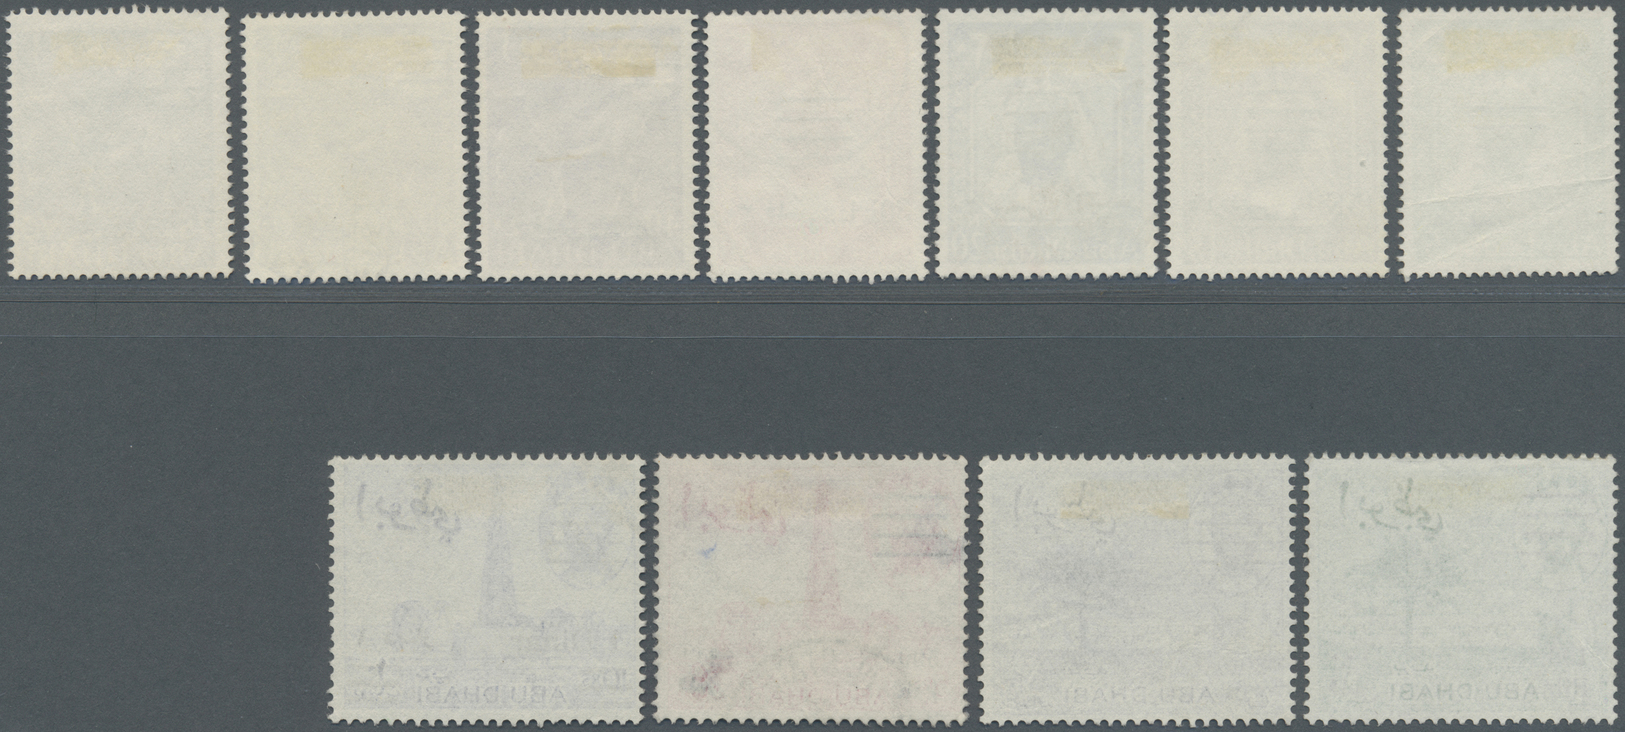 O Abu Dhabi: 1966, Revaluation Overprints, Complete Set Of Eleven Values Commercially Used, Few Slight Marks/postal Wear - Abu Dhabi